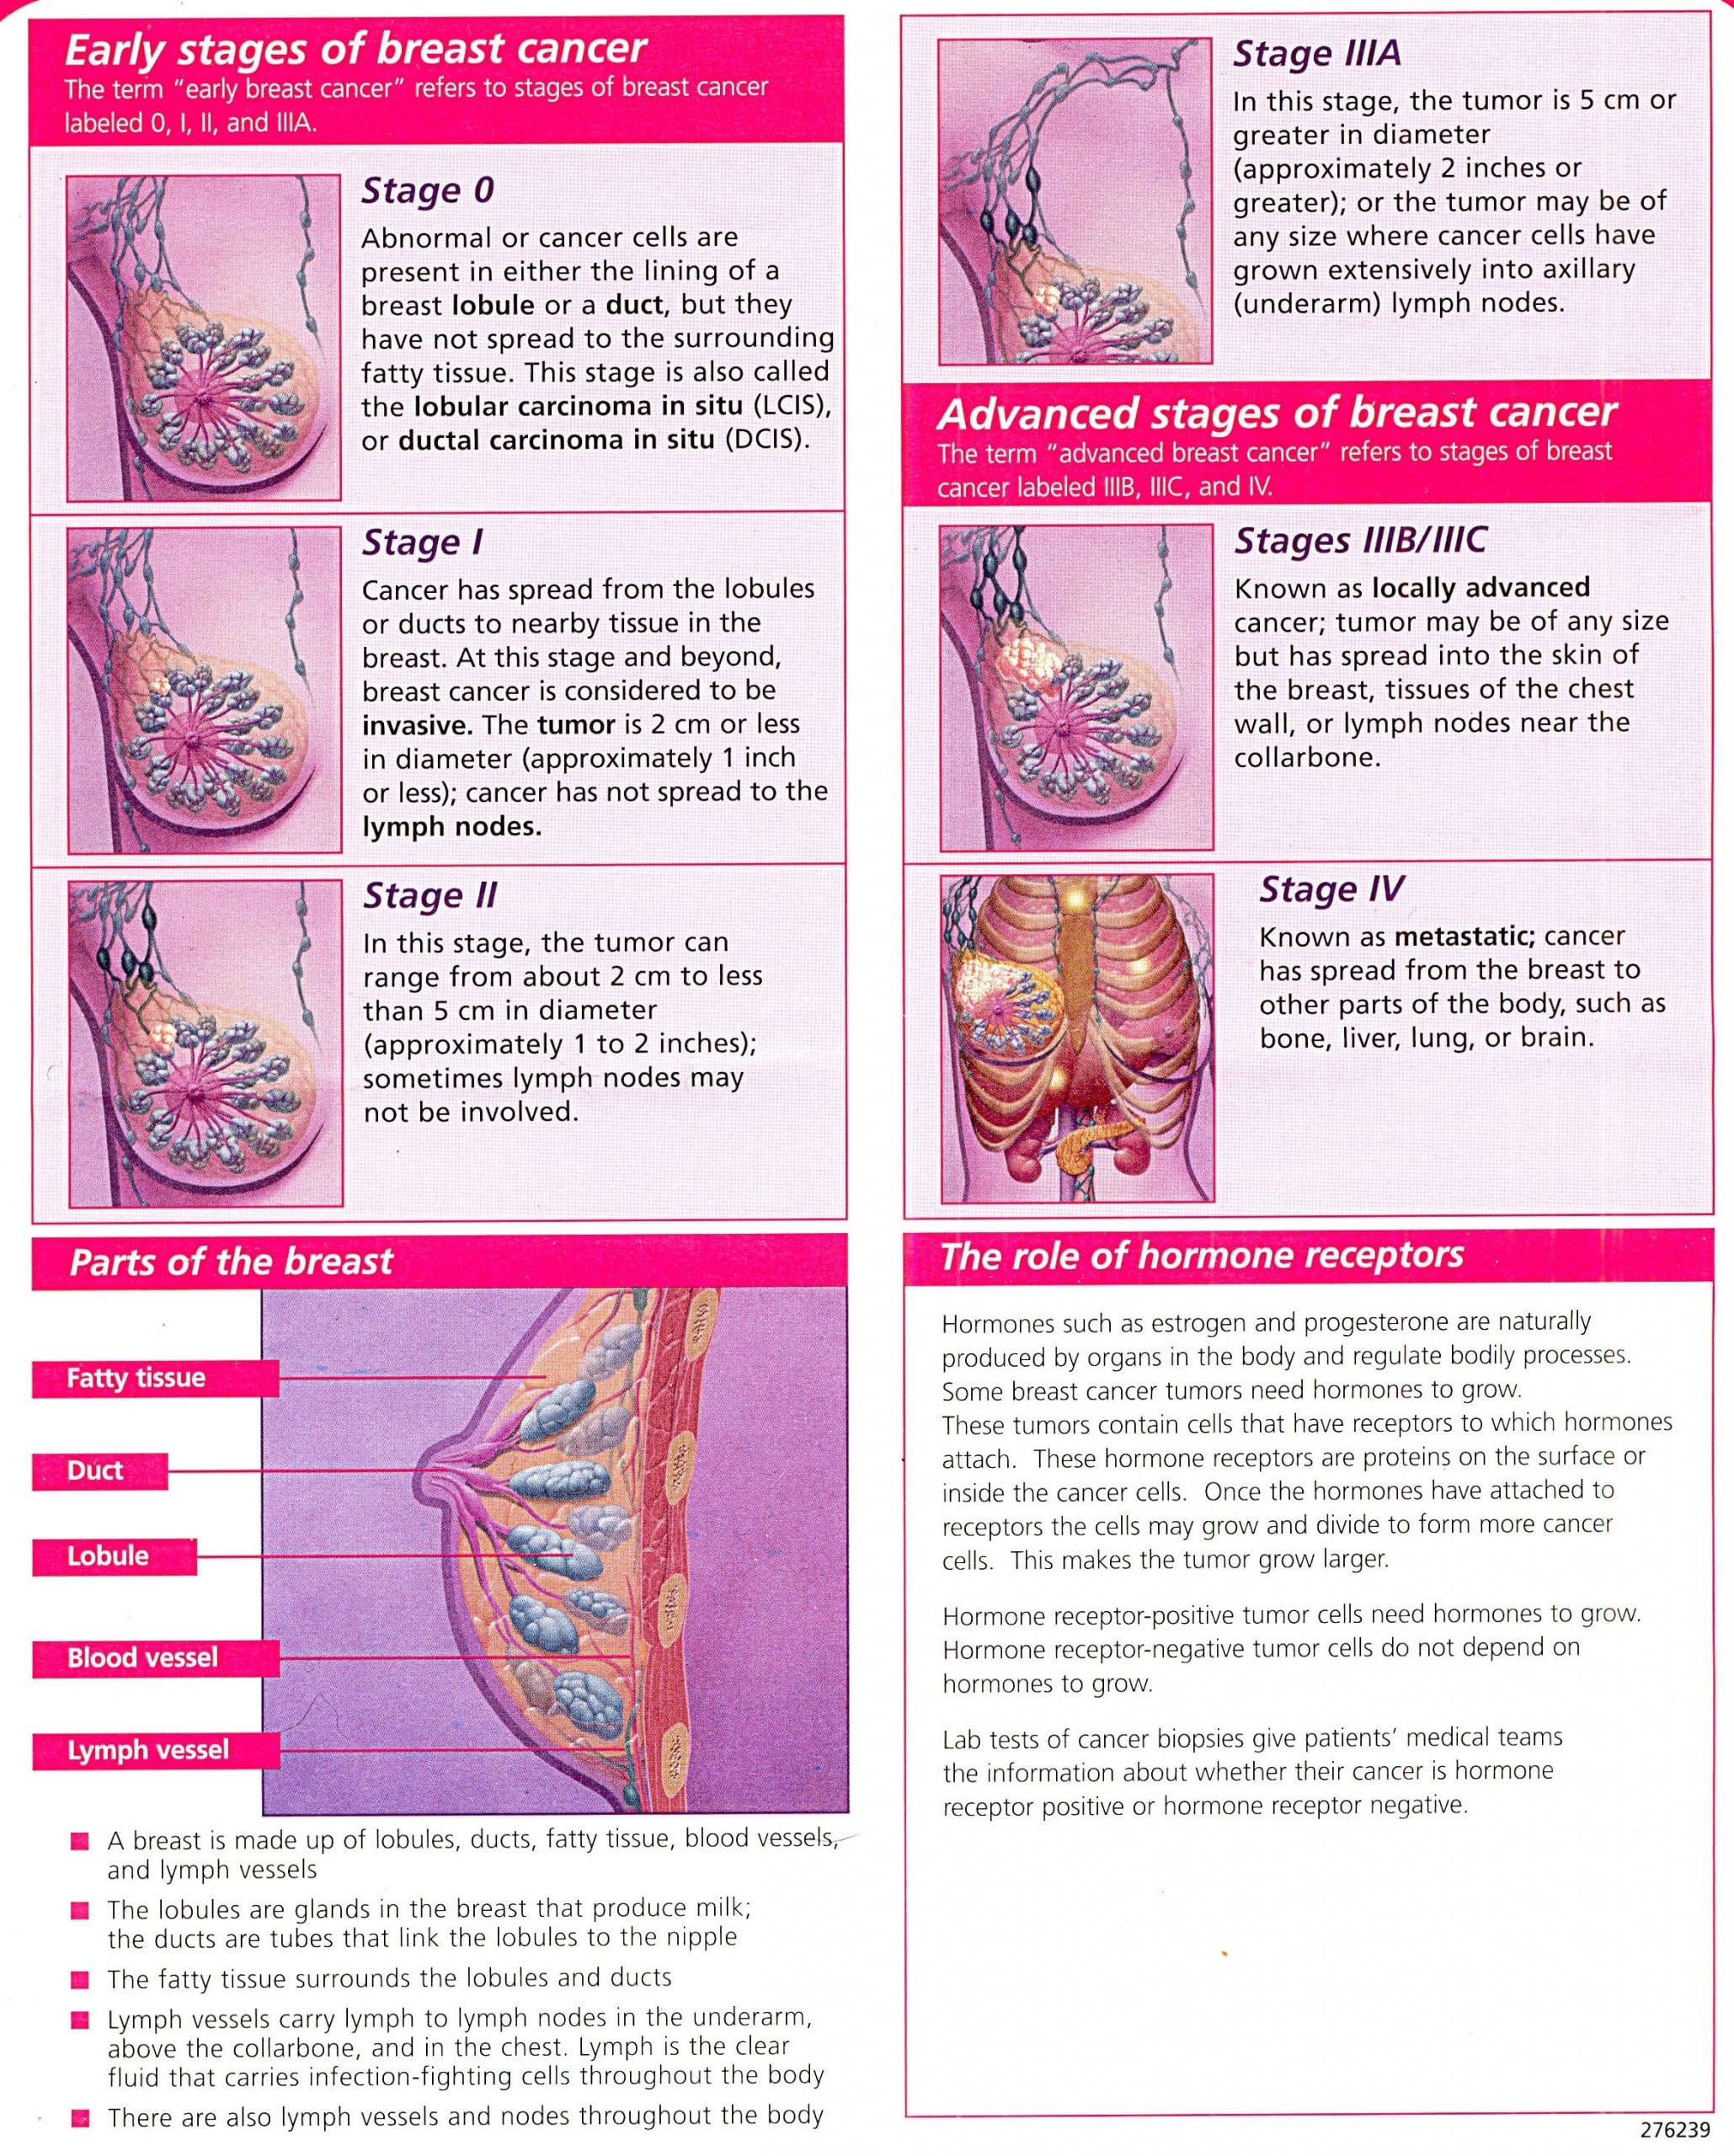 Stages of Breast Cancer Illustration : AstraZeneca